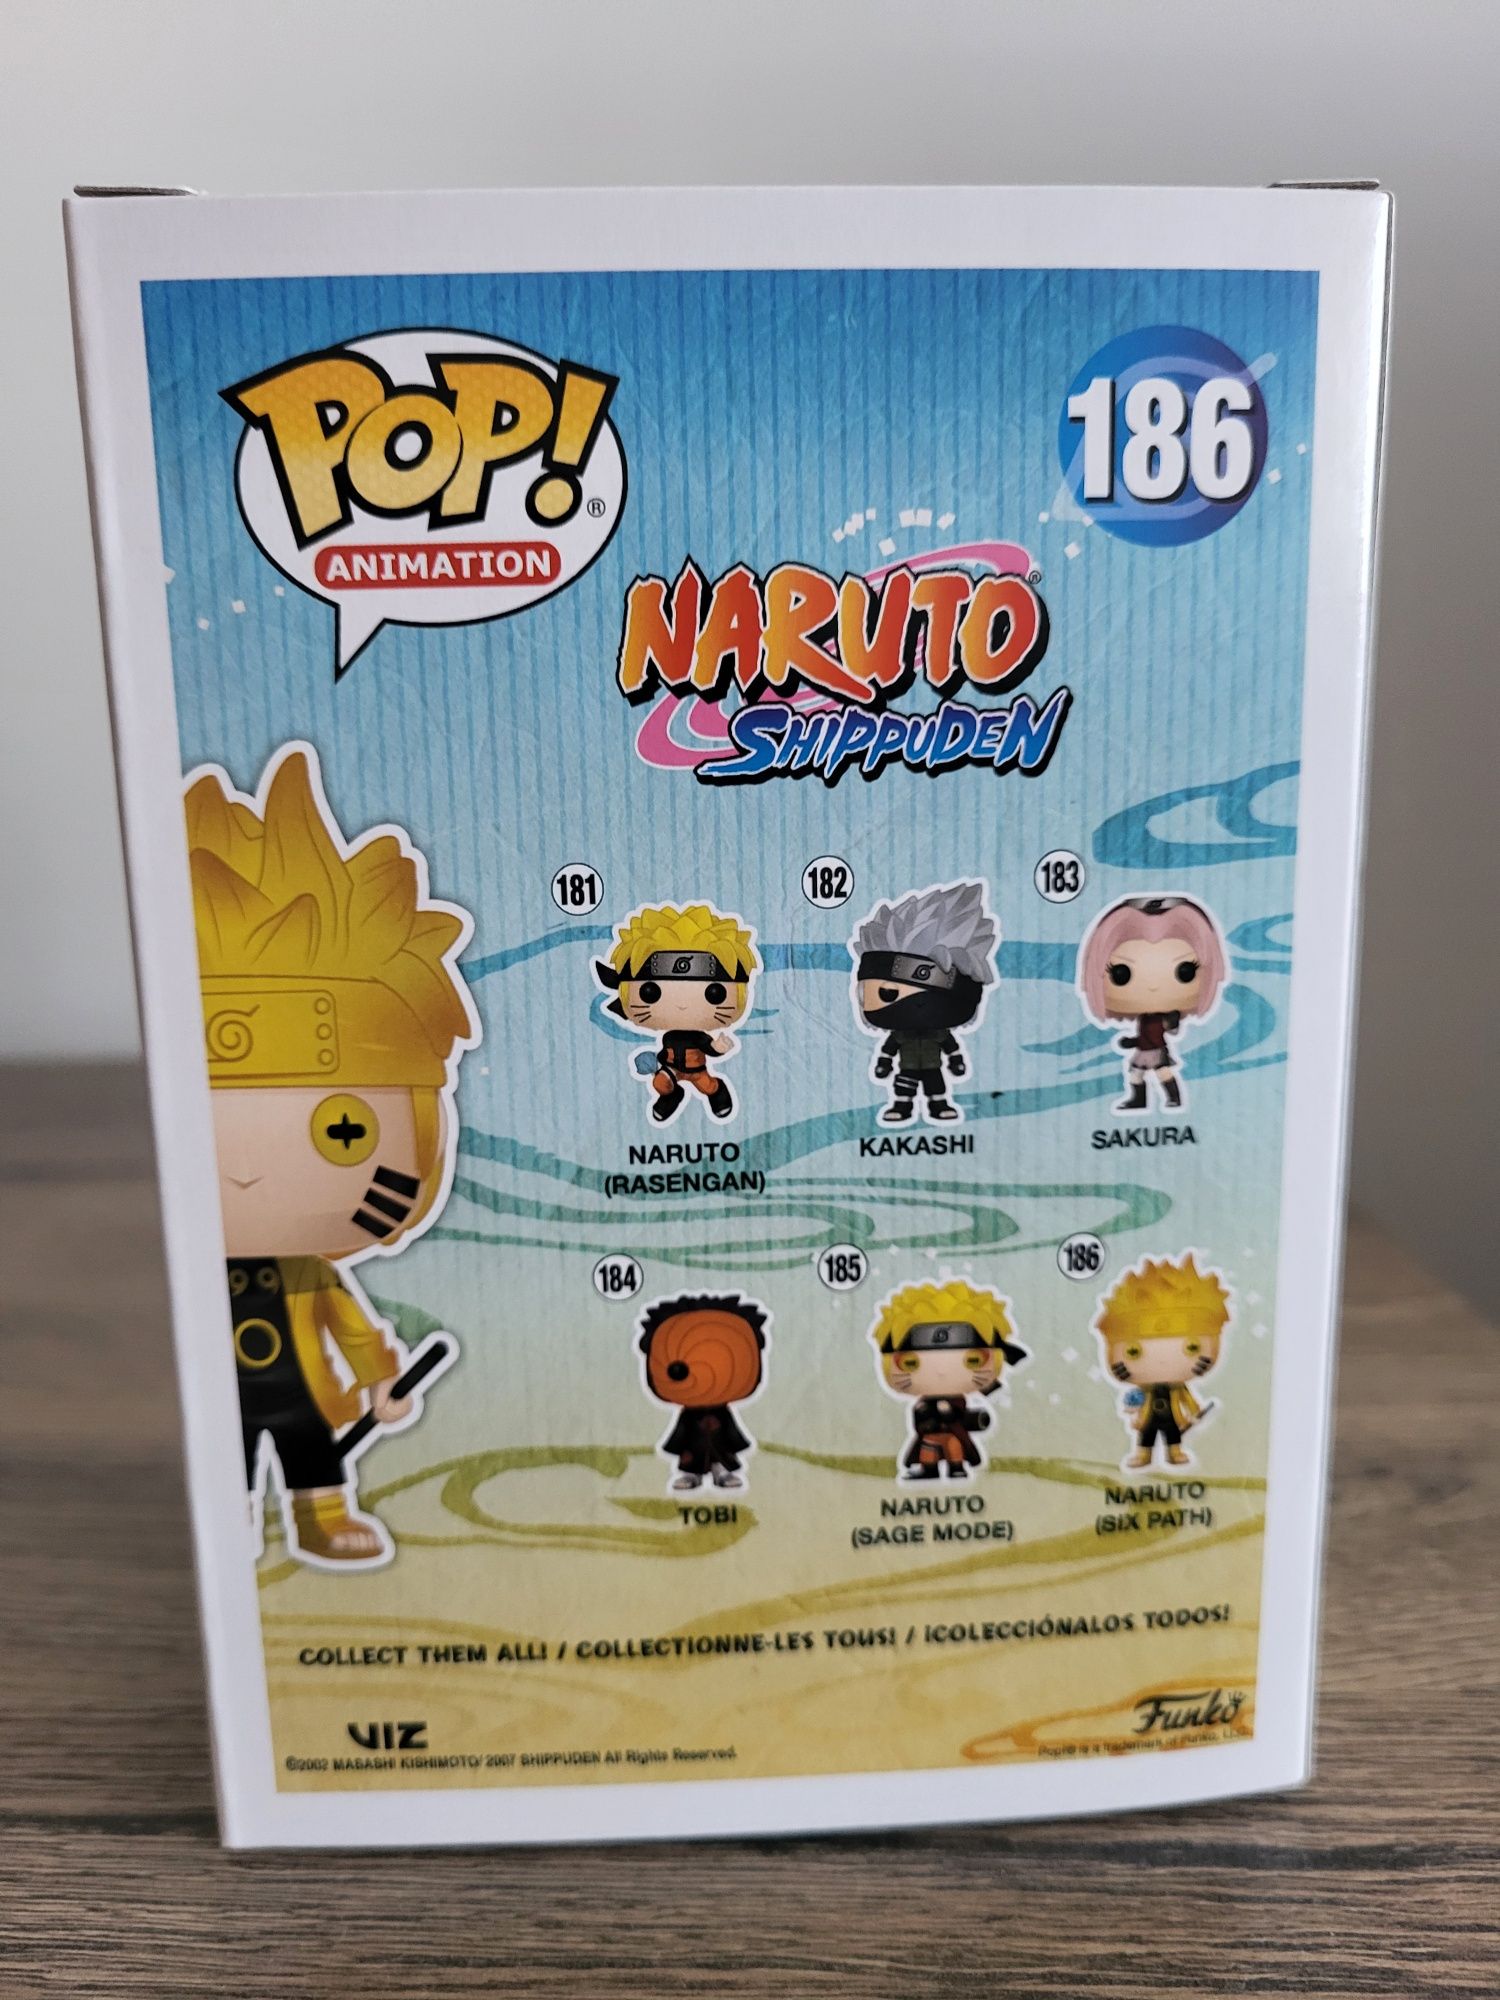 Naruto (six path) 186 Funko pop